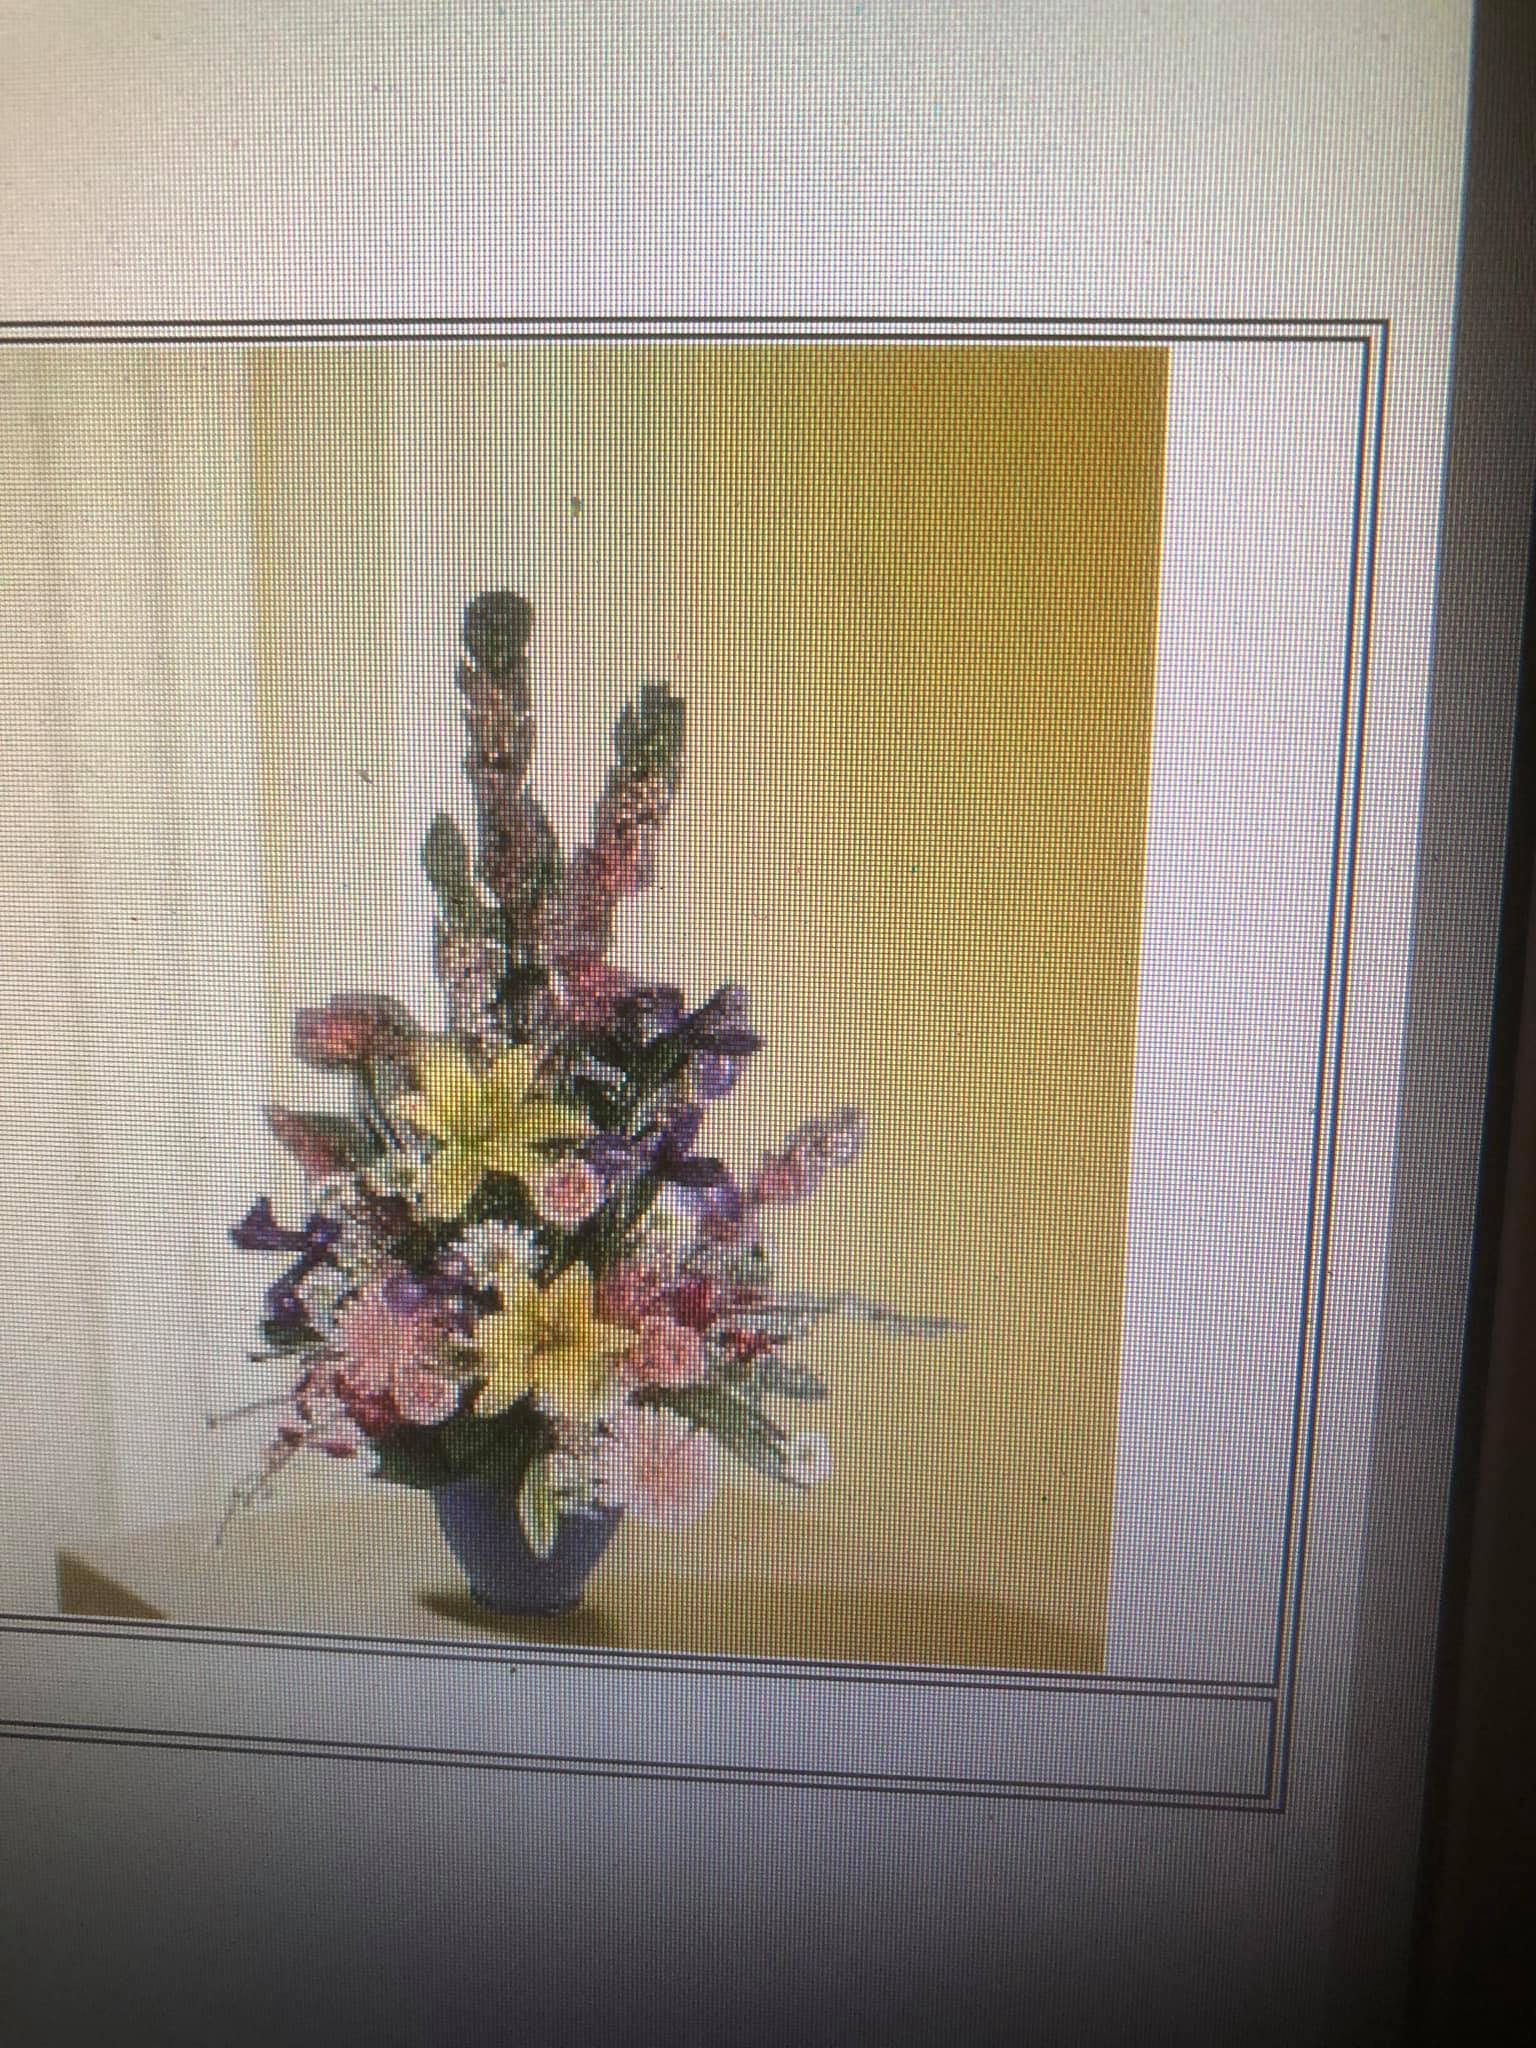 Rosewood Florist & Gifts Inc. 215 E Main St, Marion Virginia 24354